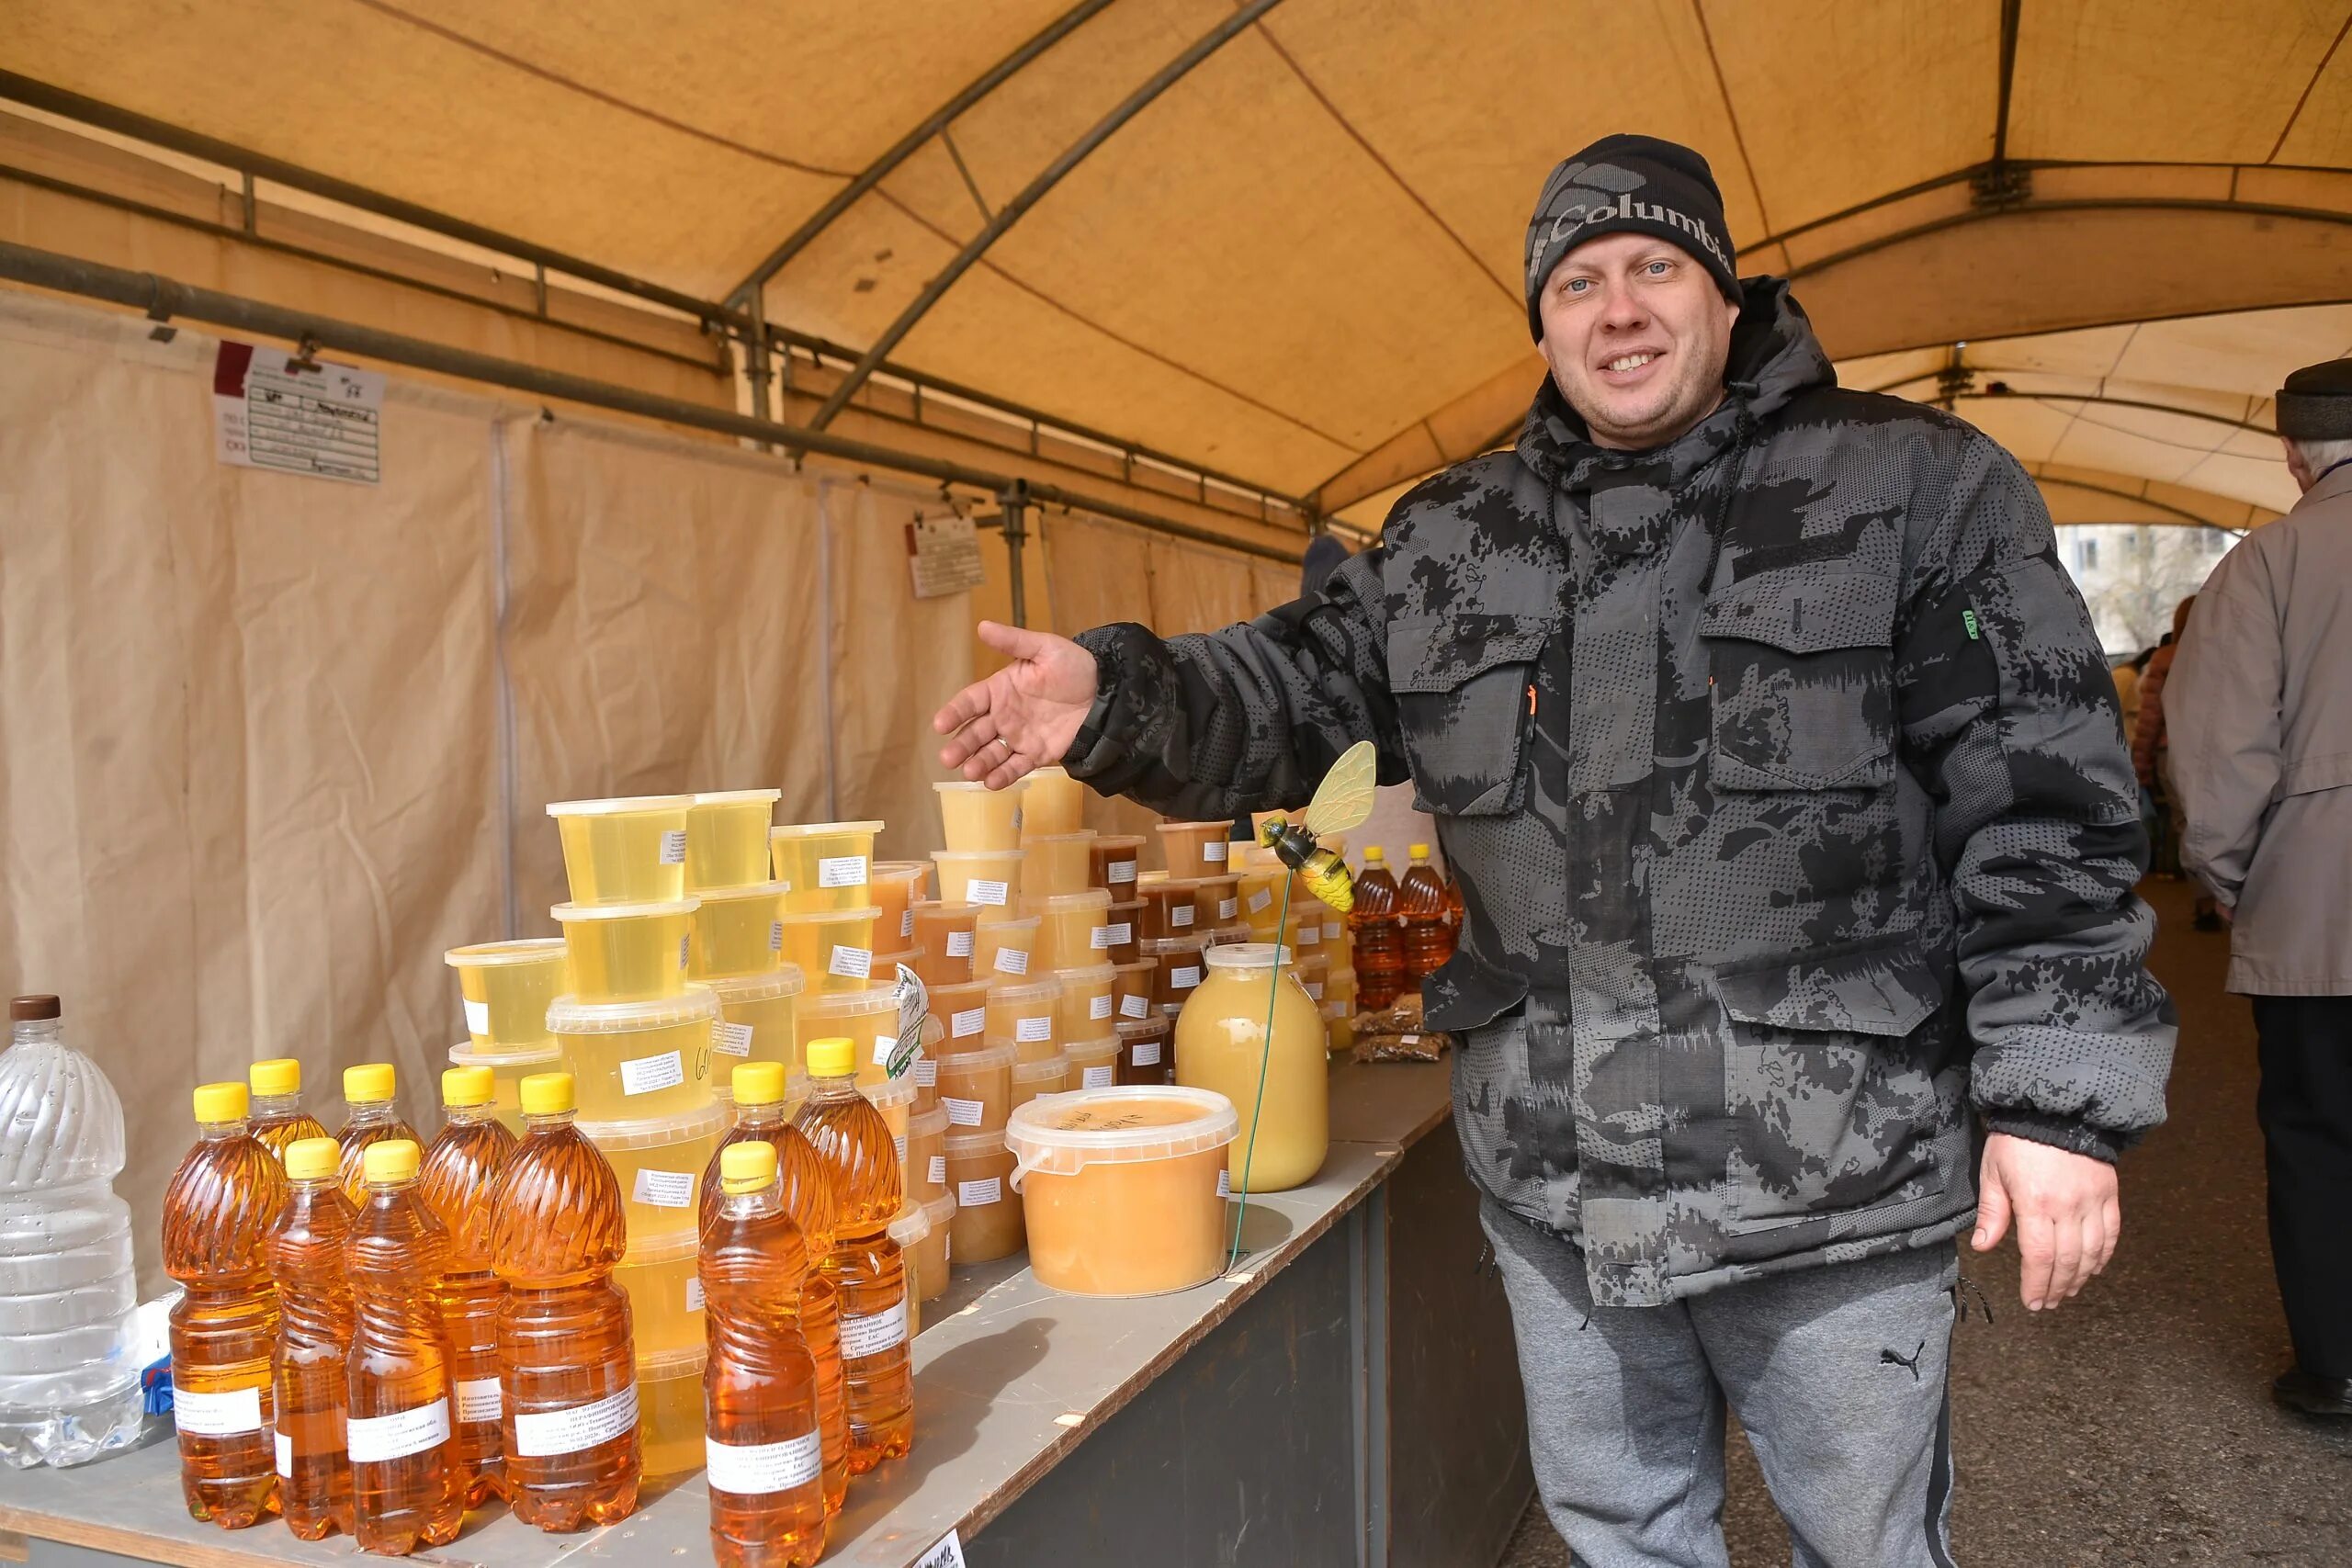 Где ярмарка меда. Выставка меда. Ярмарка мёда в Коломенском. Медовая ярмарка в Коломенском. Ярмарка выходного дня.